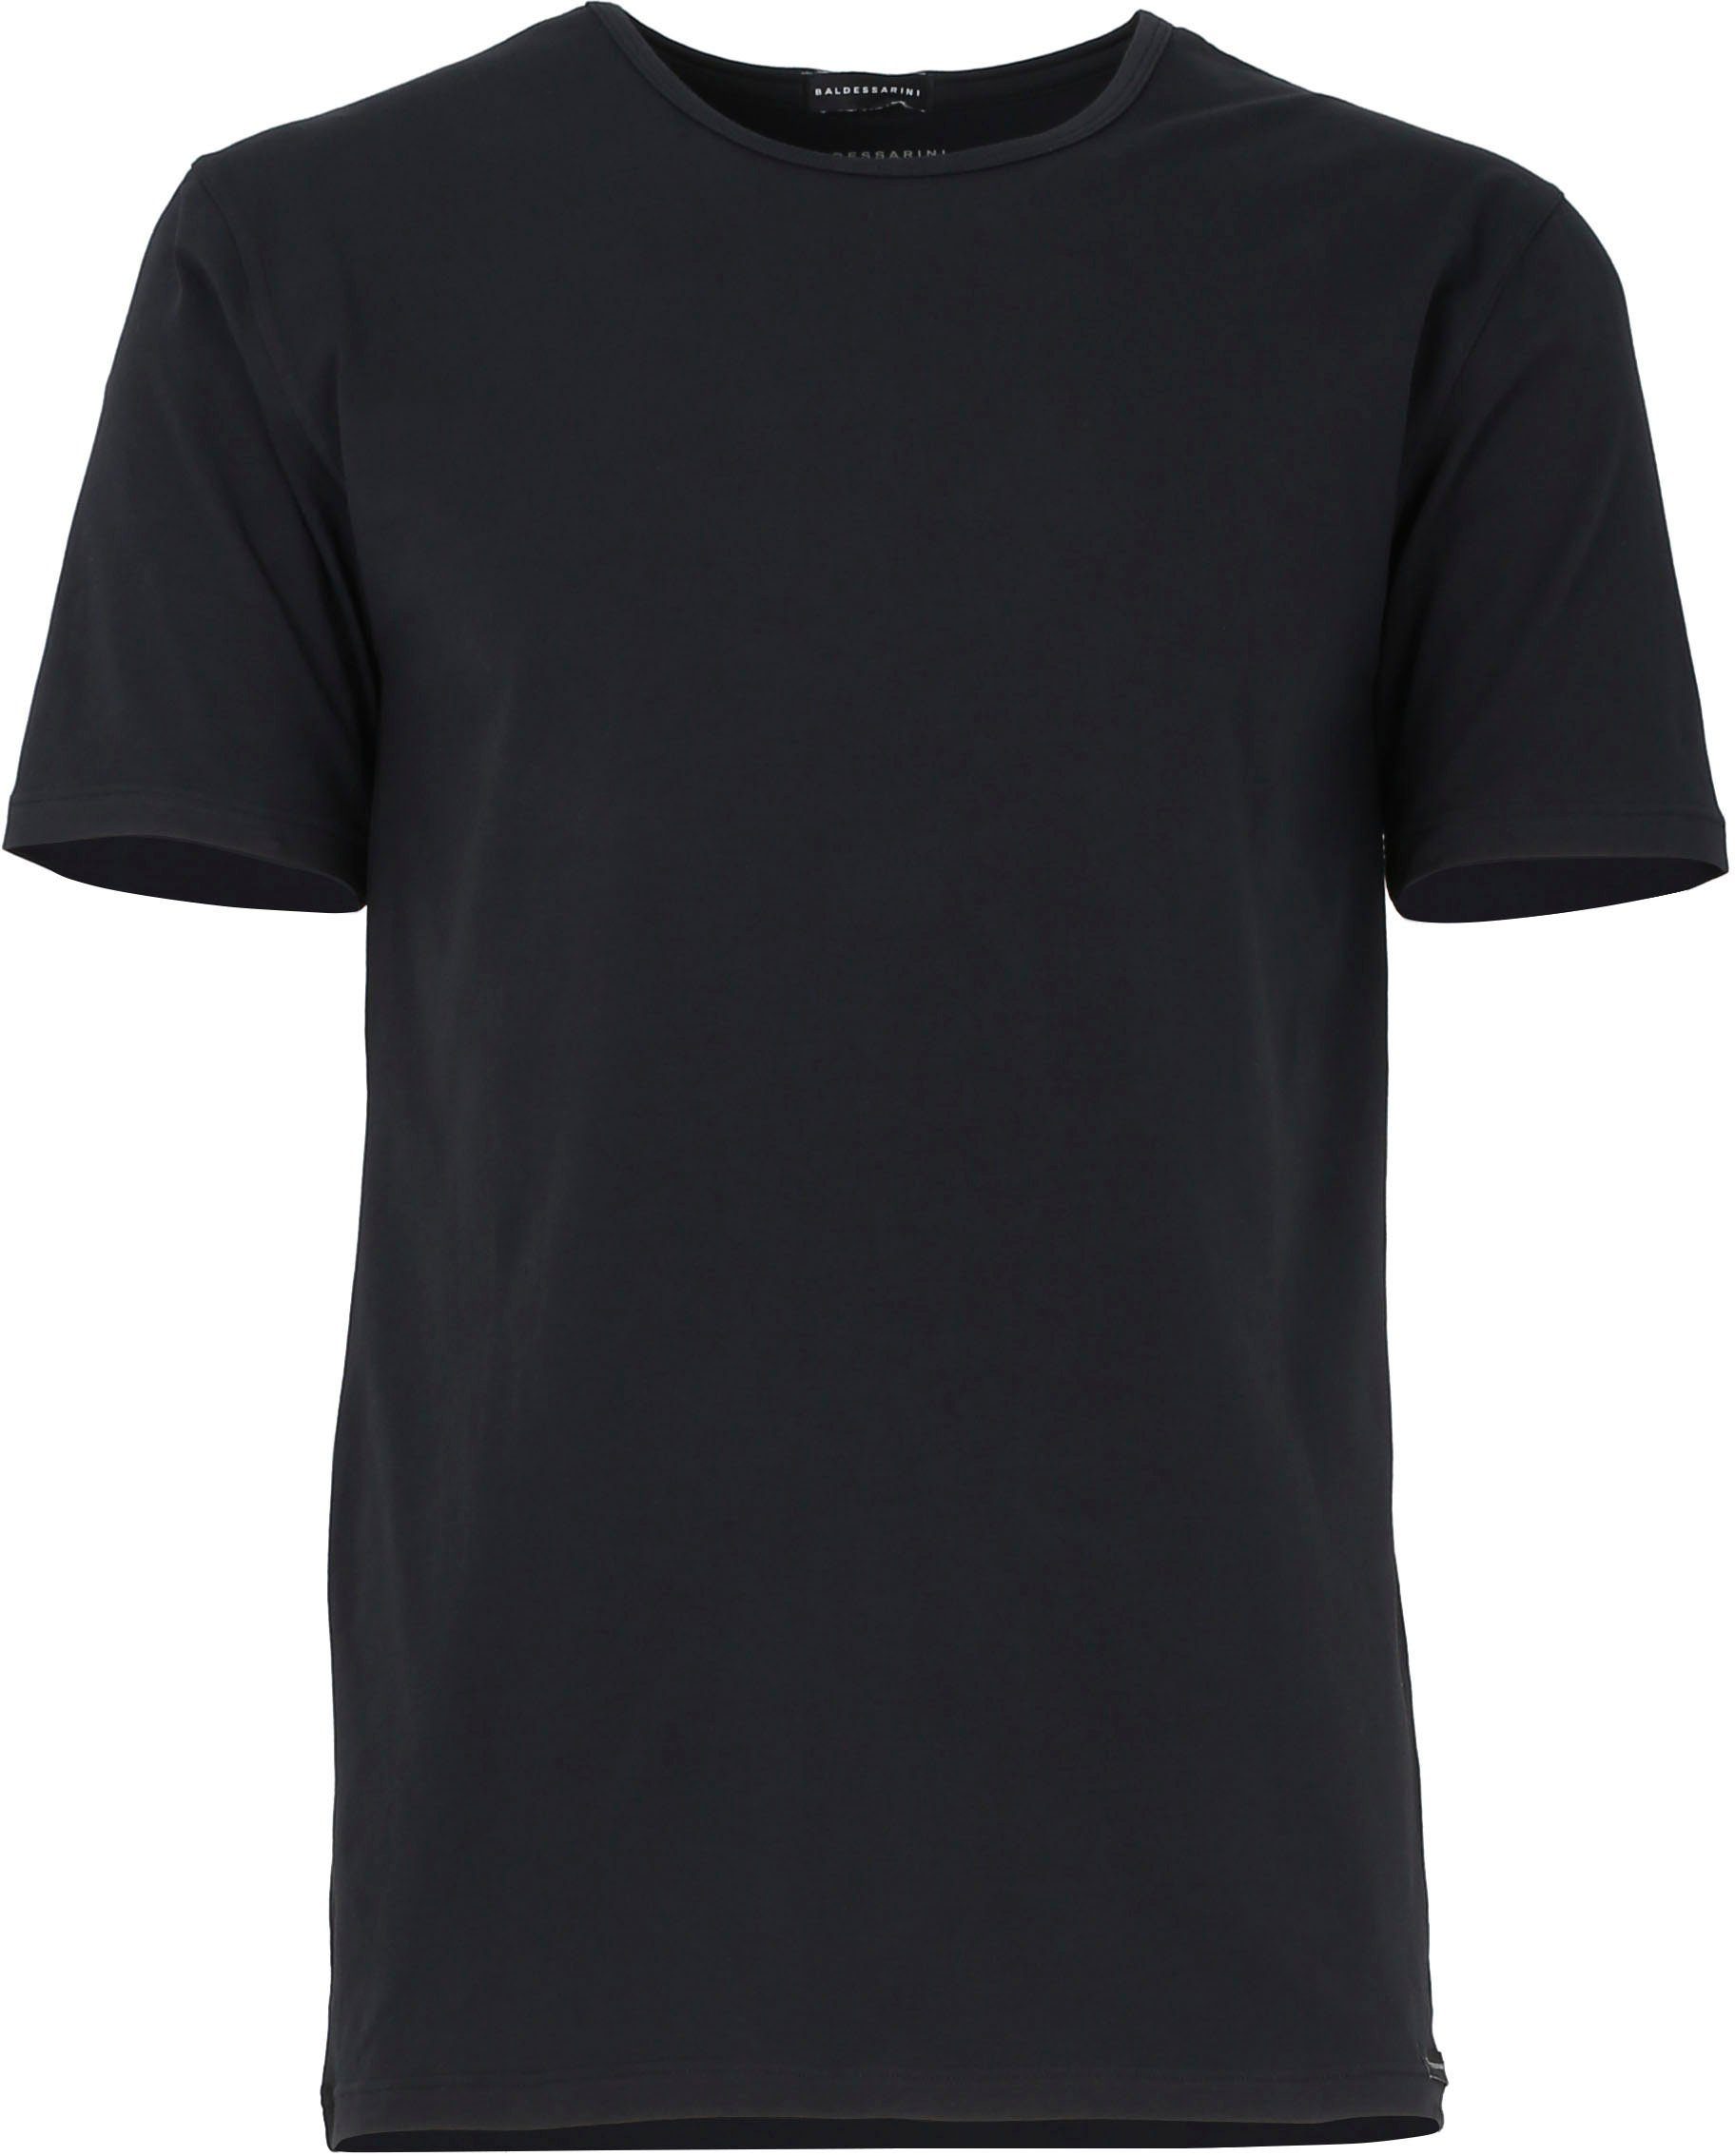 BALDESSARINI T-Shirt Shirt, 1/2, Rundhal schwarz-dunkel-uni